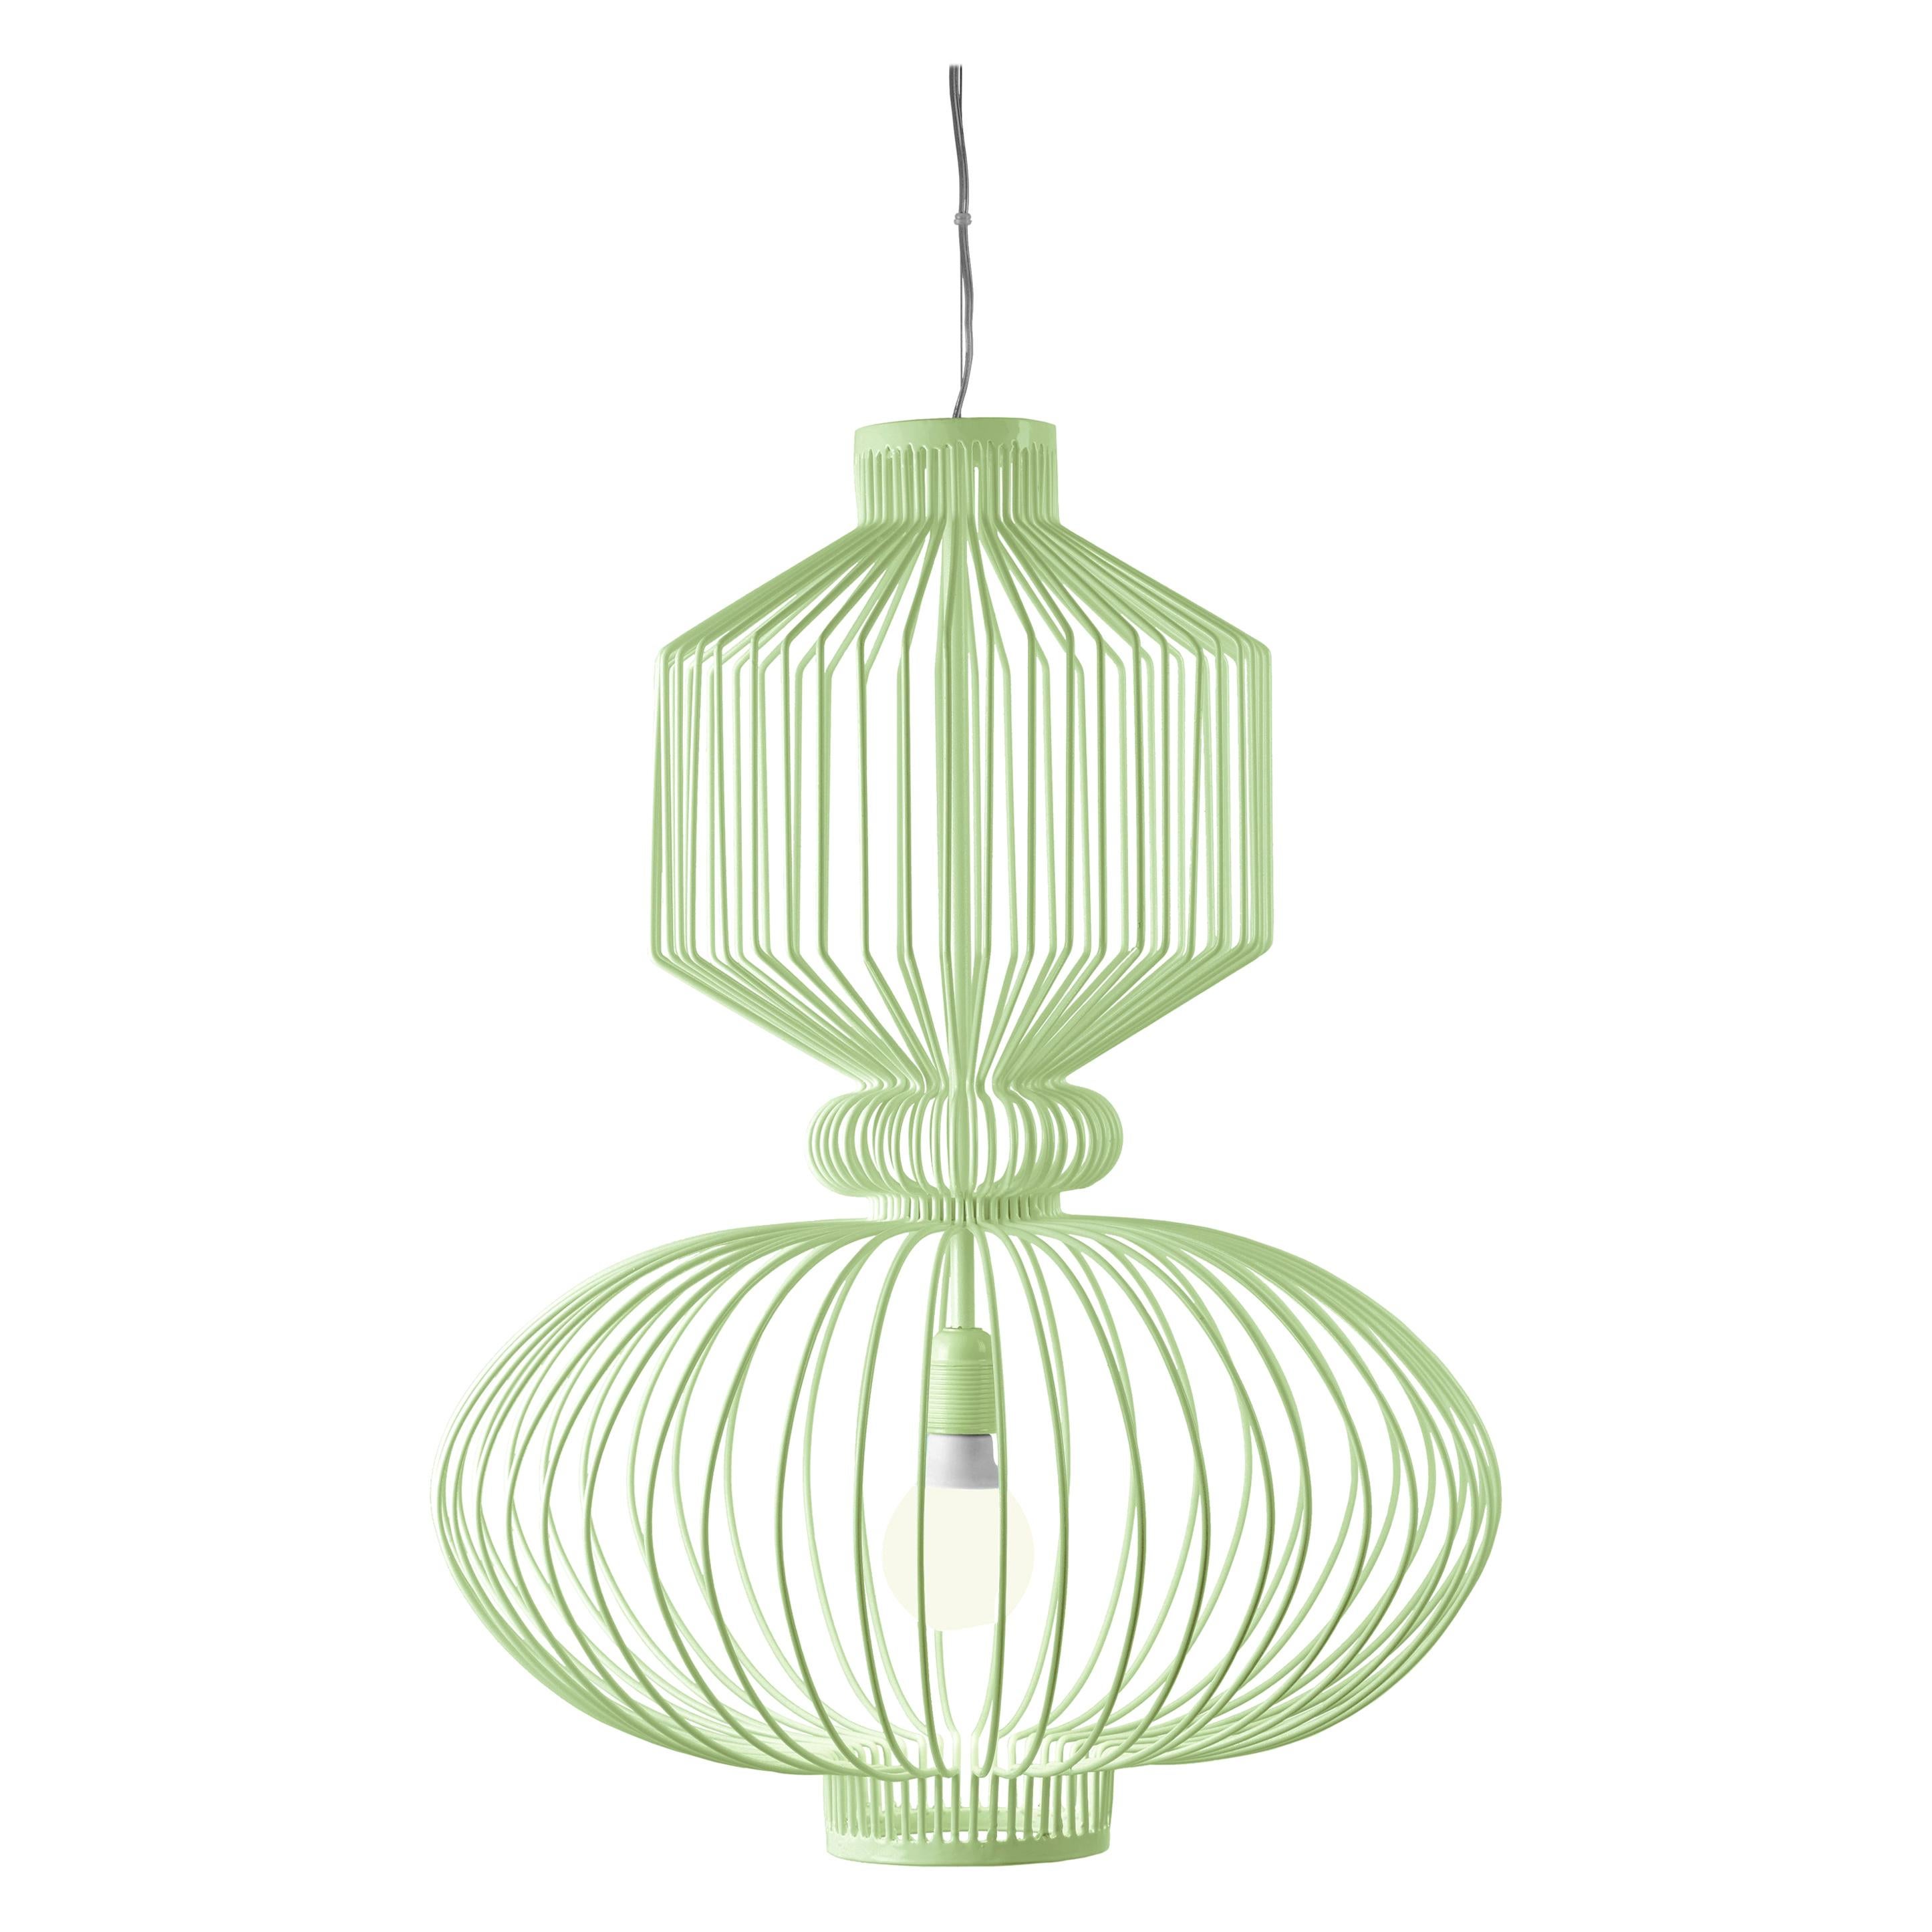 Art Deco, Industrial Dream Green Pendant Revolution Suspension Lamp For Sale